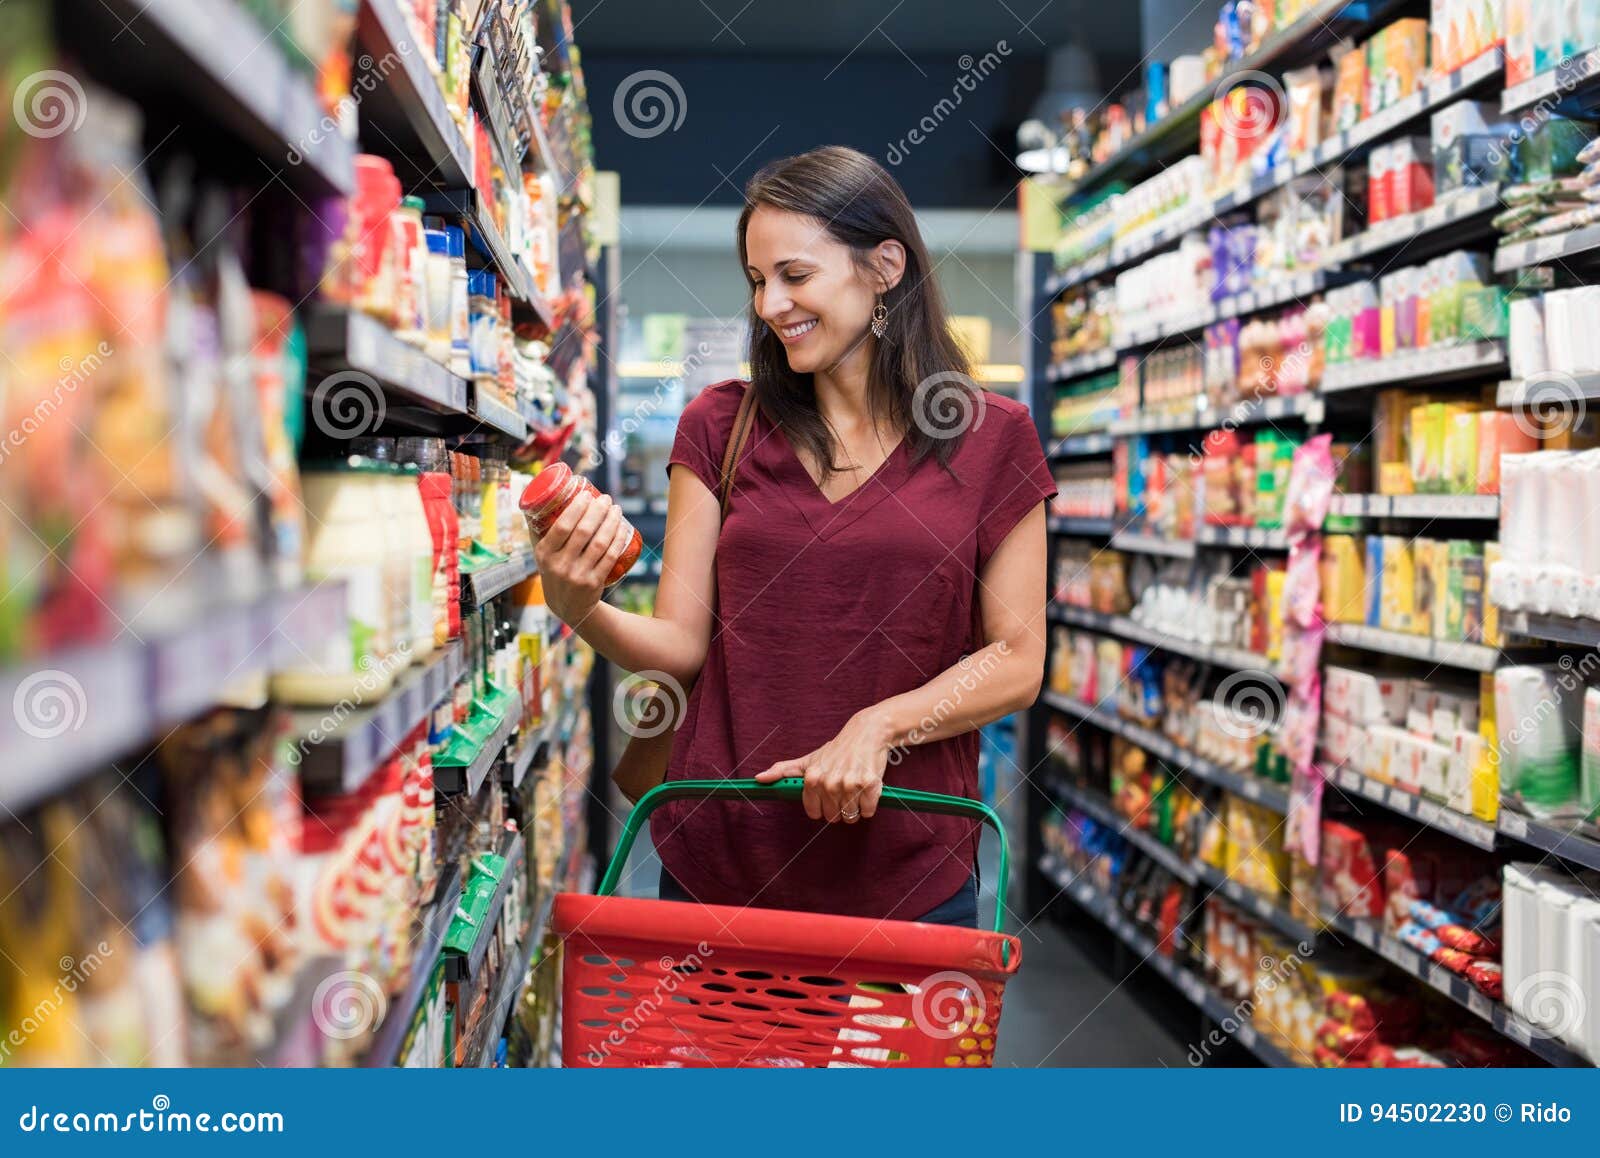 smiling woman at supermarket